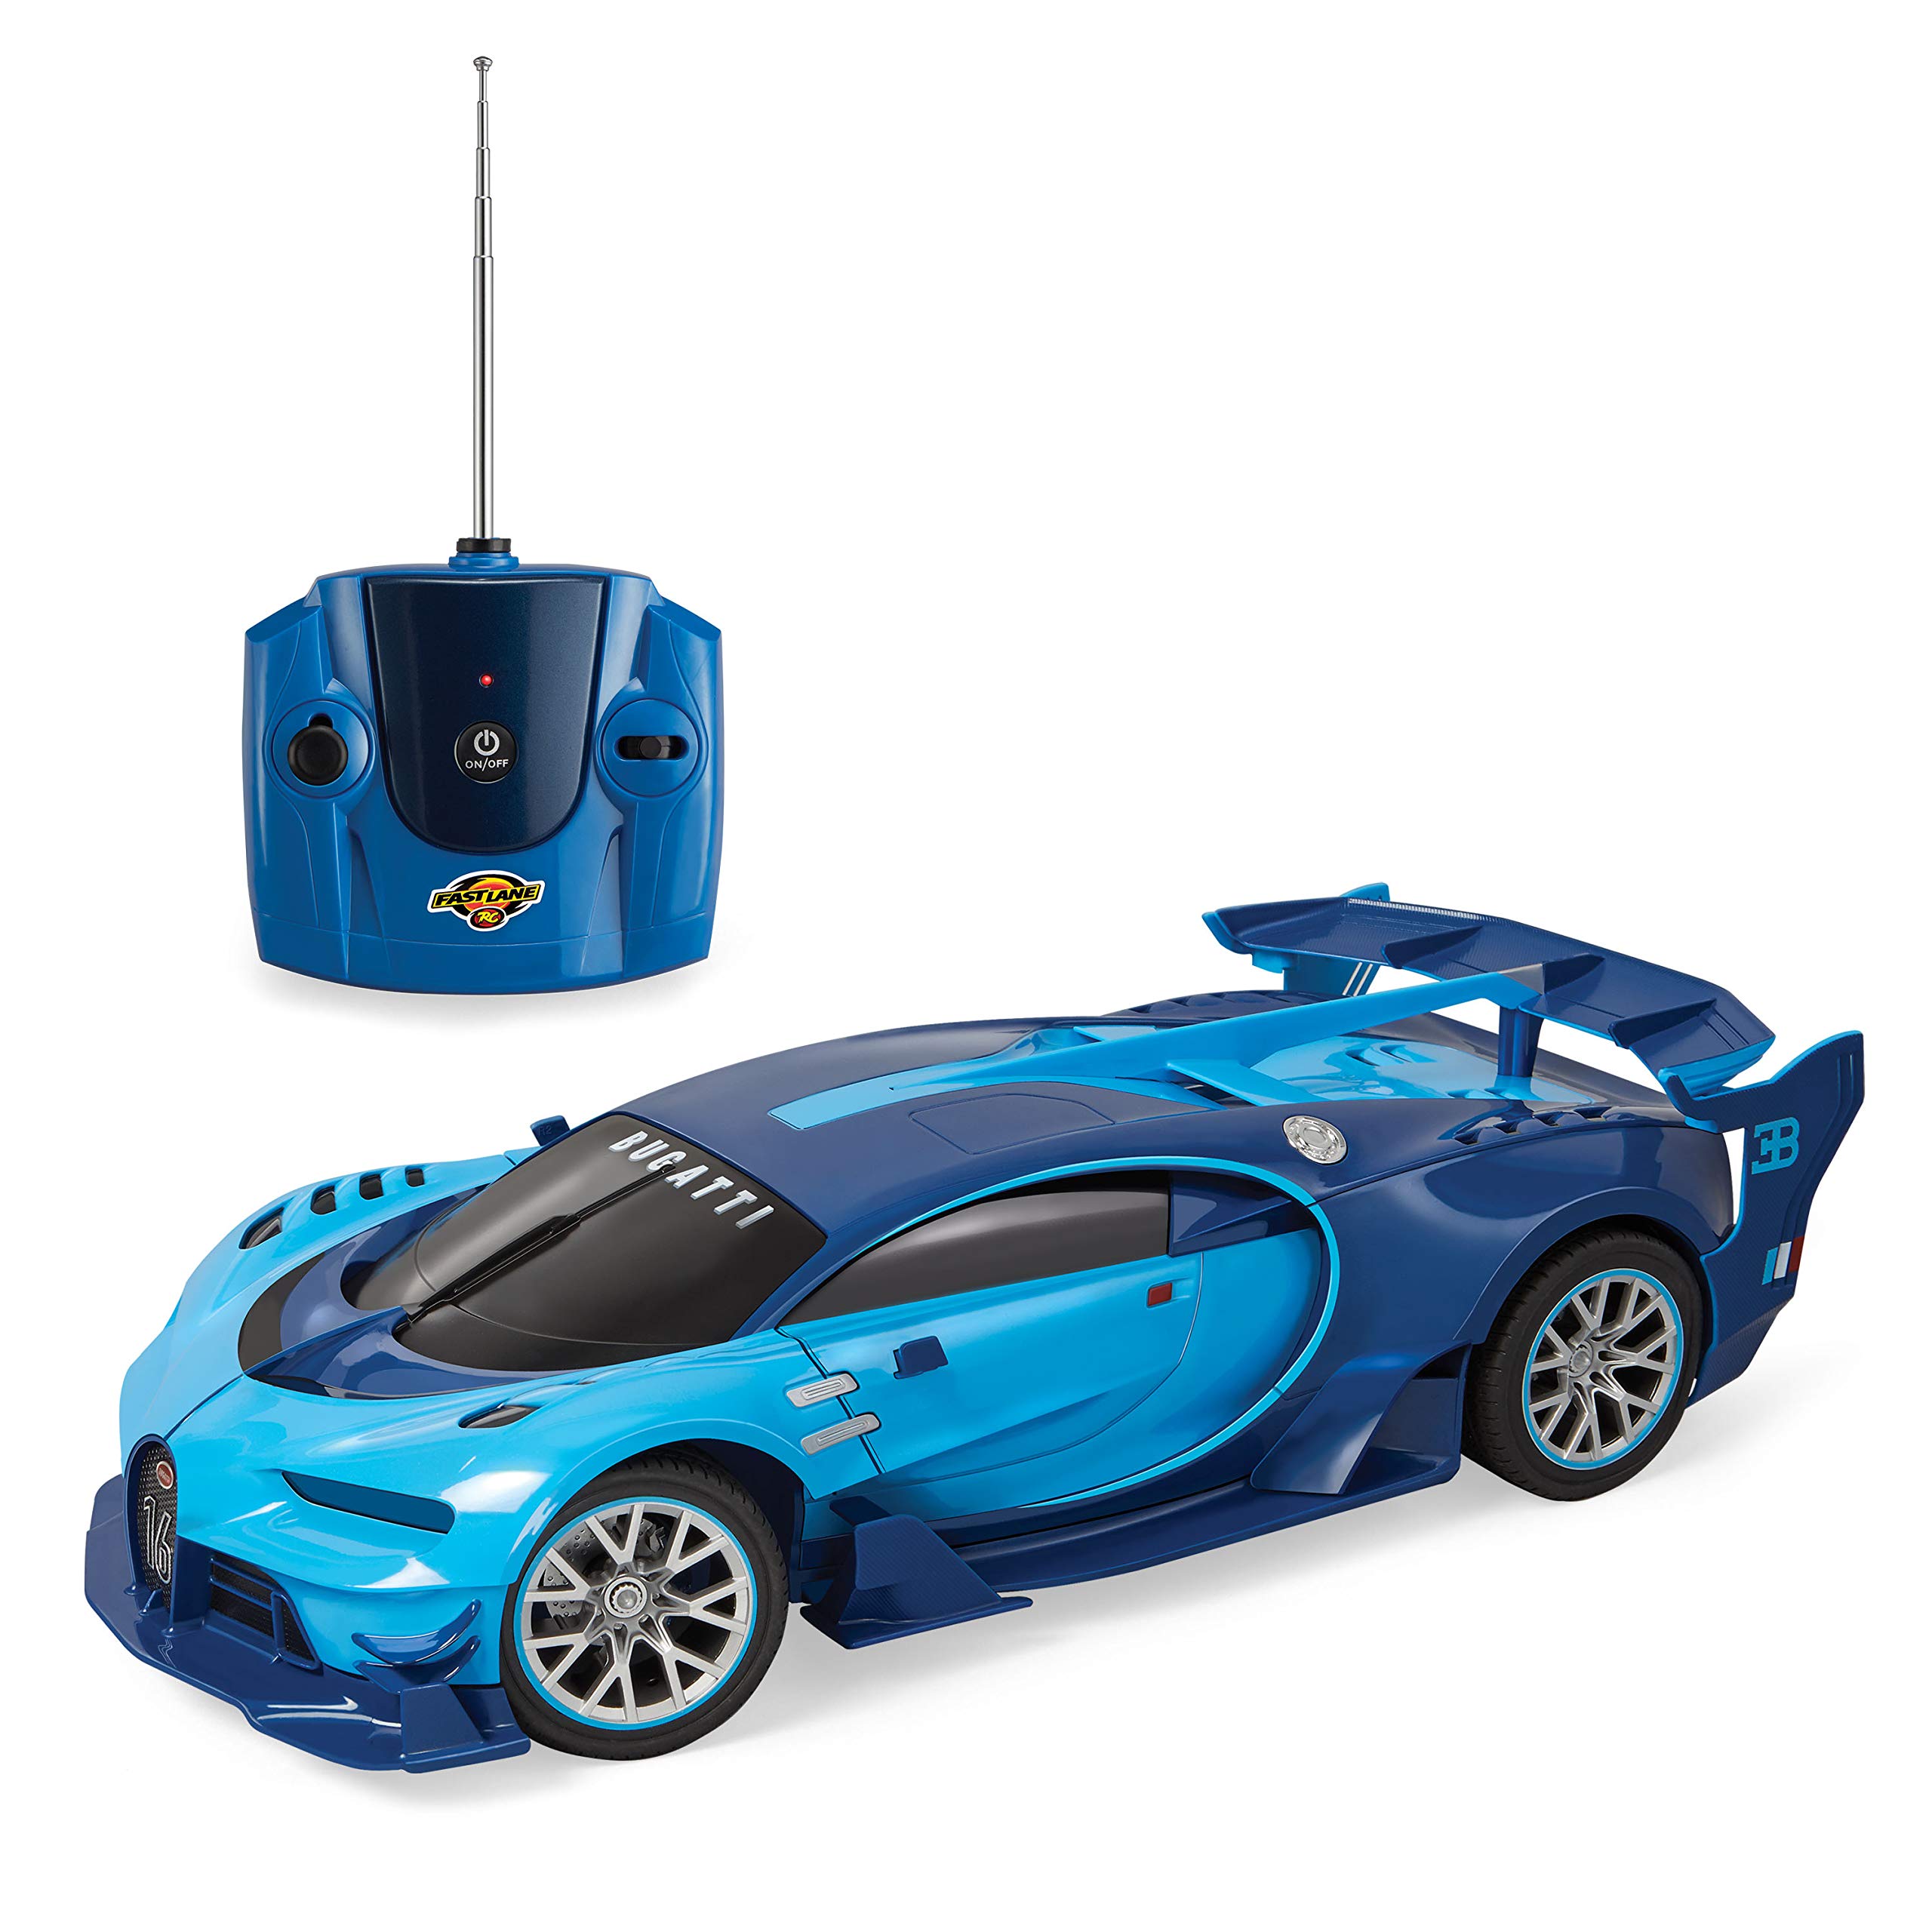 Fast Lane 1:12 Bugatti Vison  Remote Control Toy Car $15.49 + Free Shipping w/ Prime or on $25+